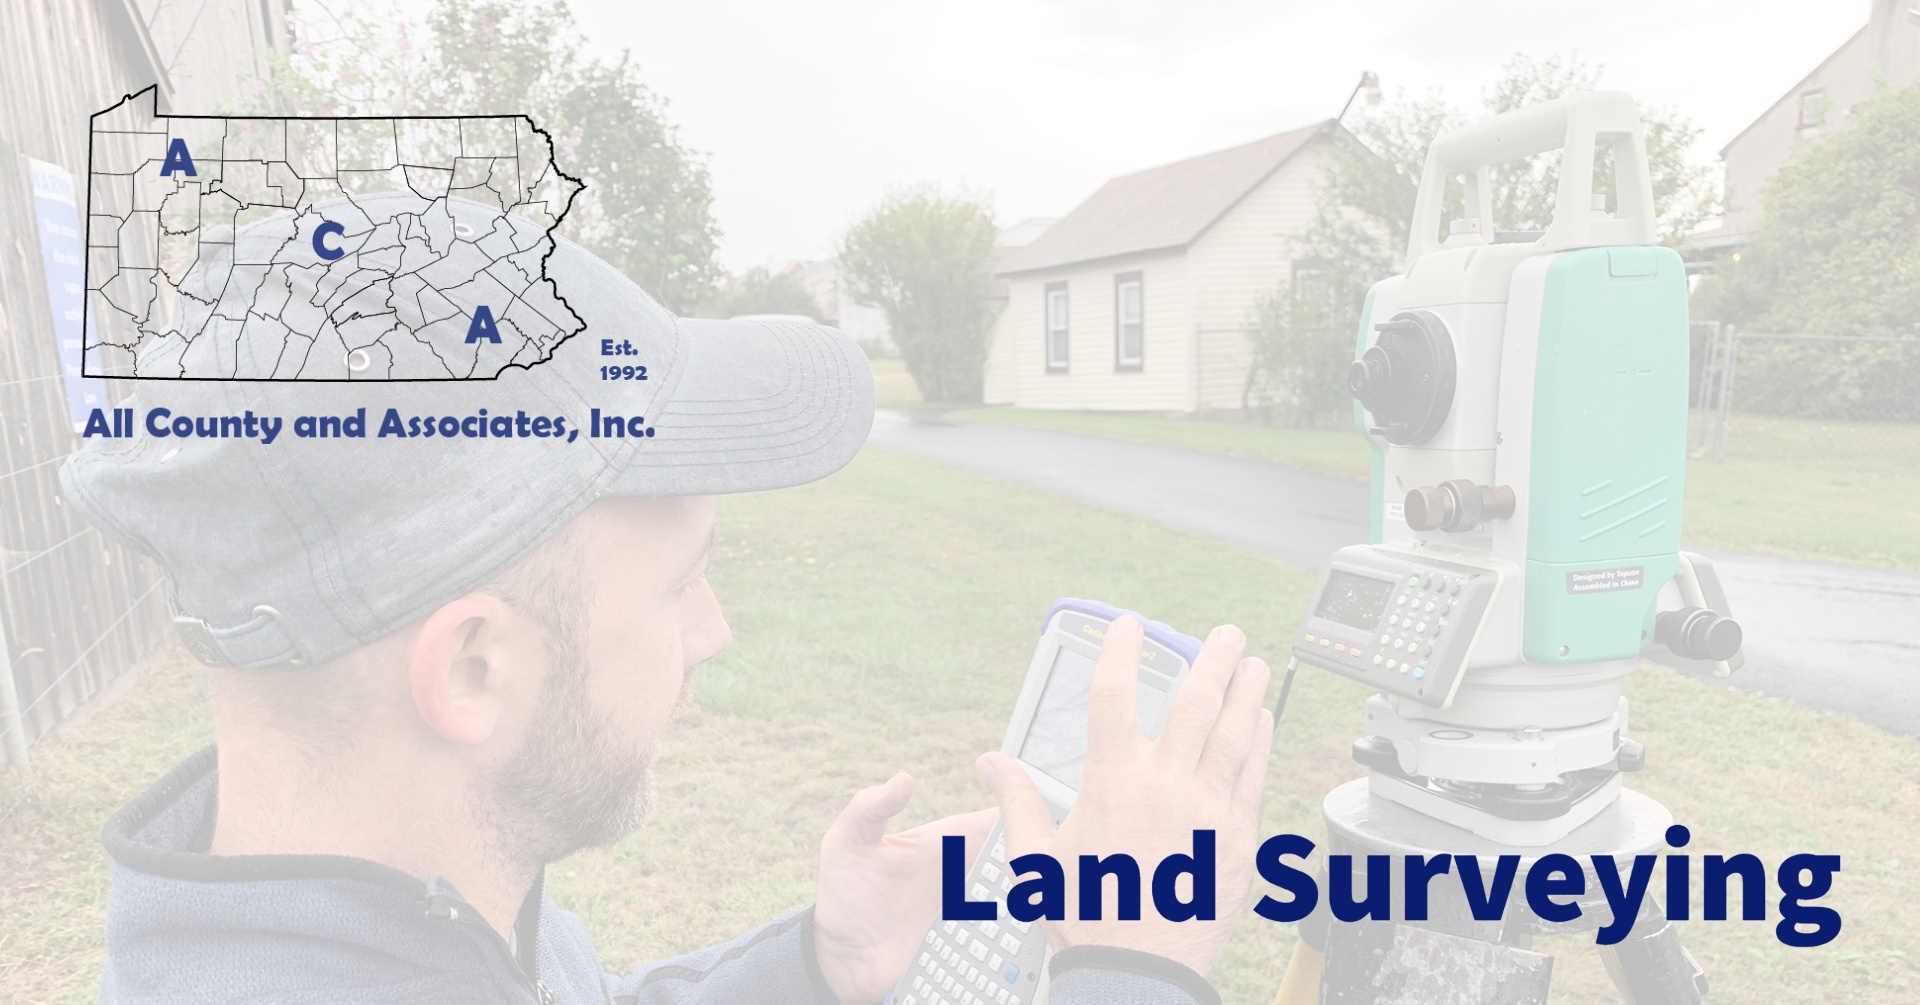 Land surveyor using equipment for boundary survey, floodplain survey or topographic survey